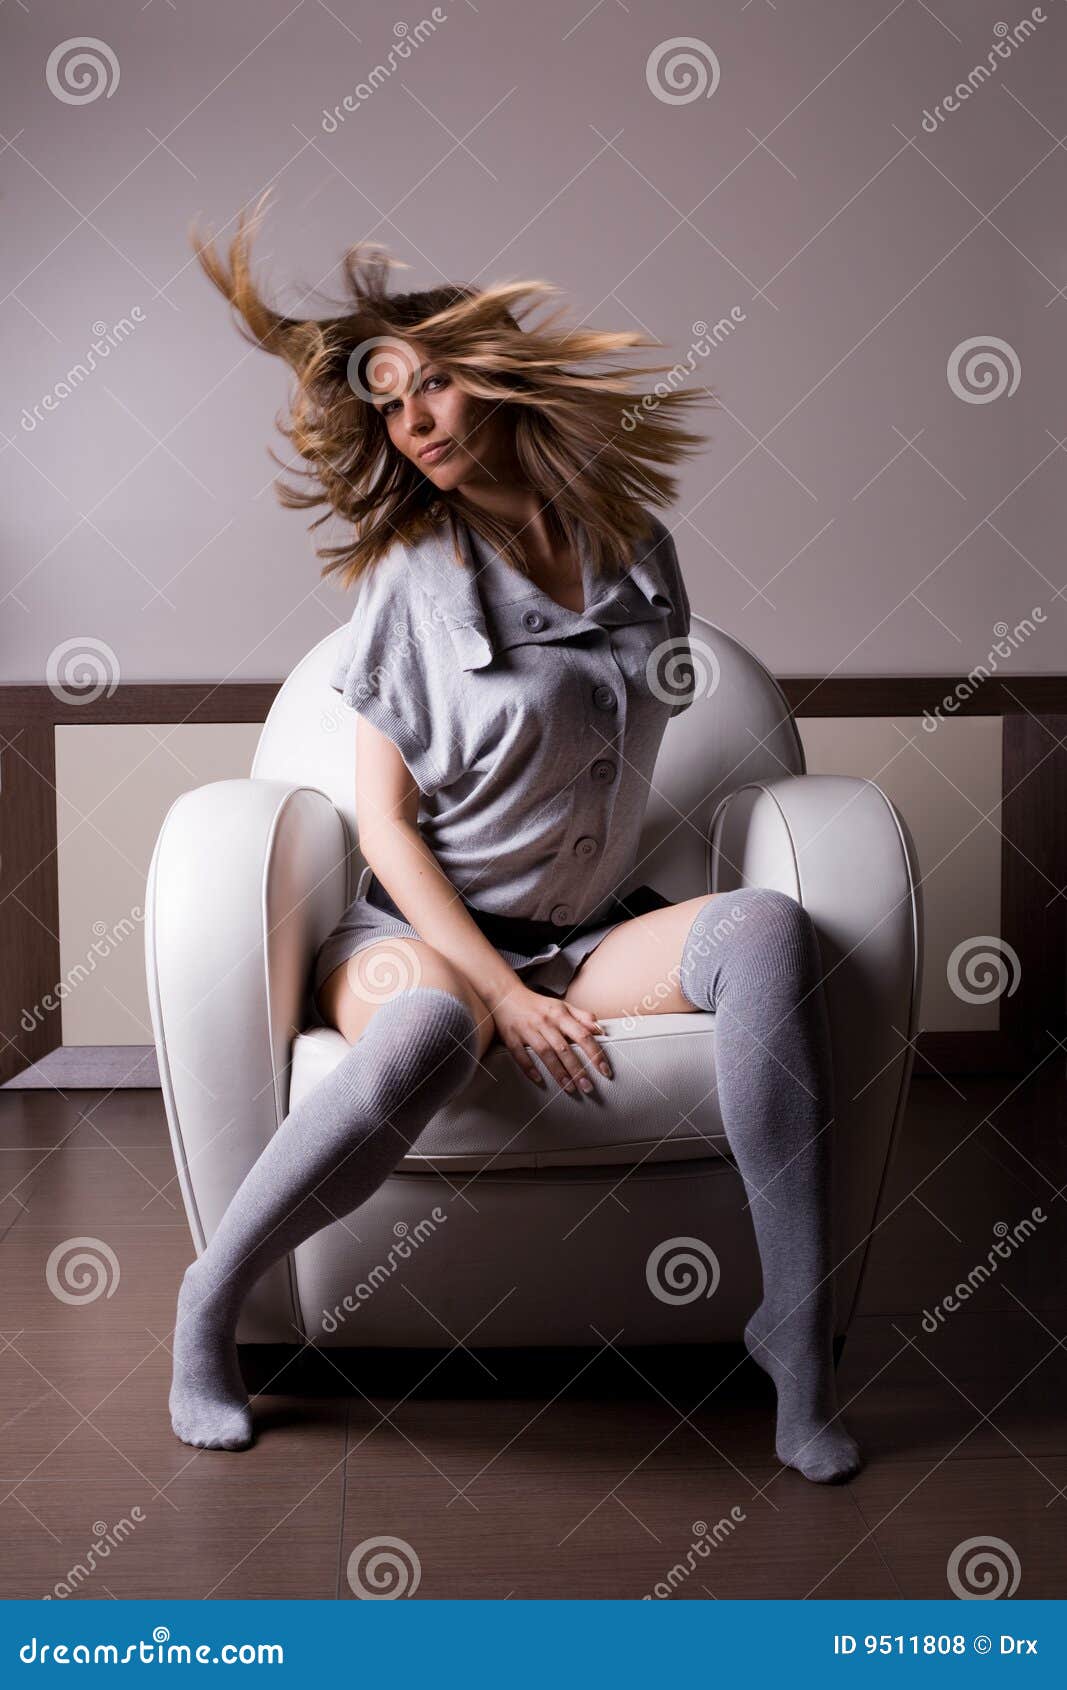 woman in sofa. woman in white sofa with beautiful hair